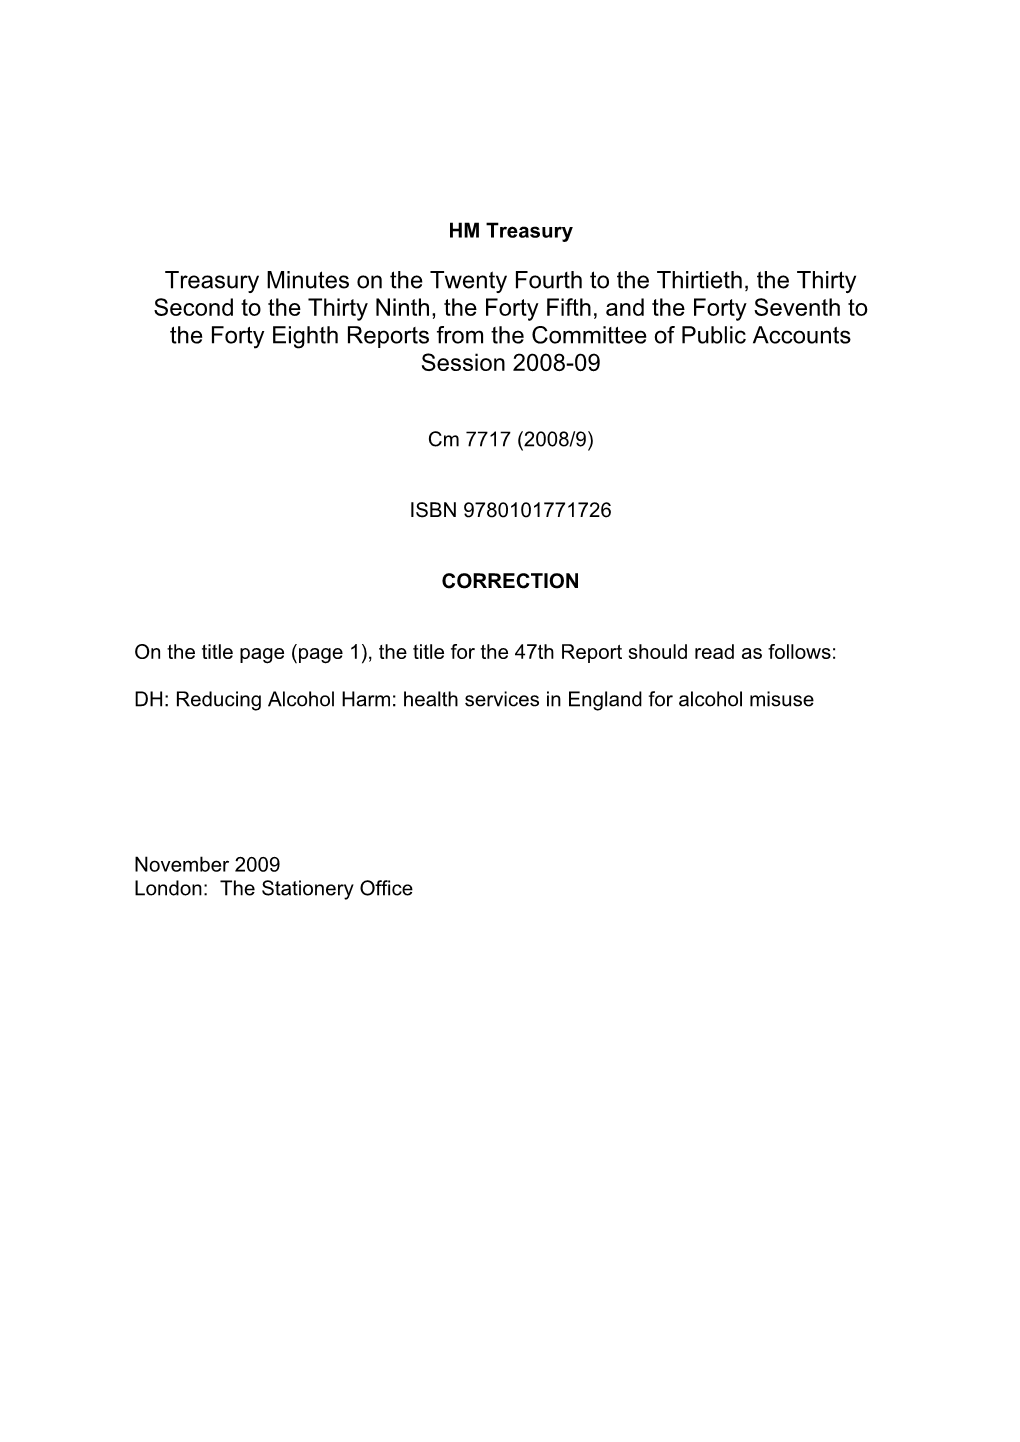 Treasury Minutes on the Twenty Fourth to the Thirtieth, the Thirty